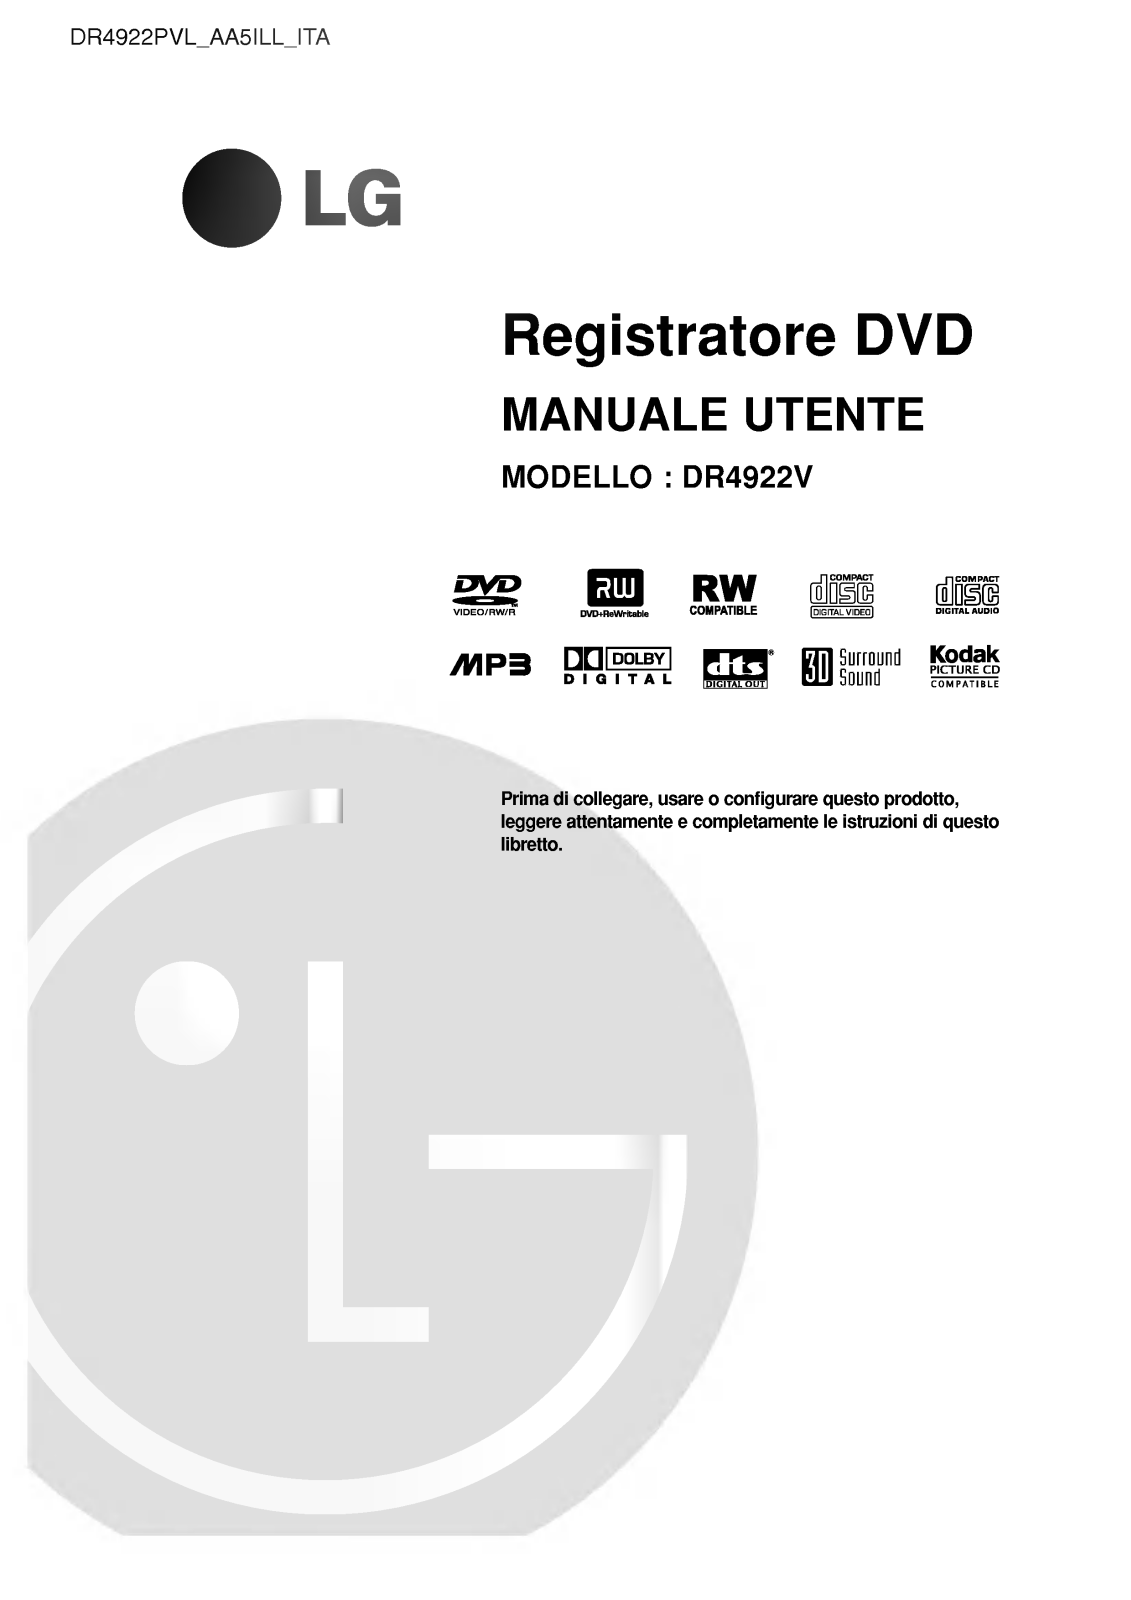 LG DR4922PVL User Manual